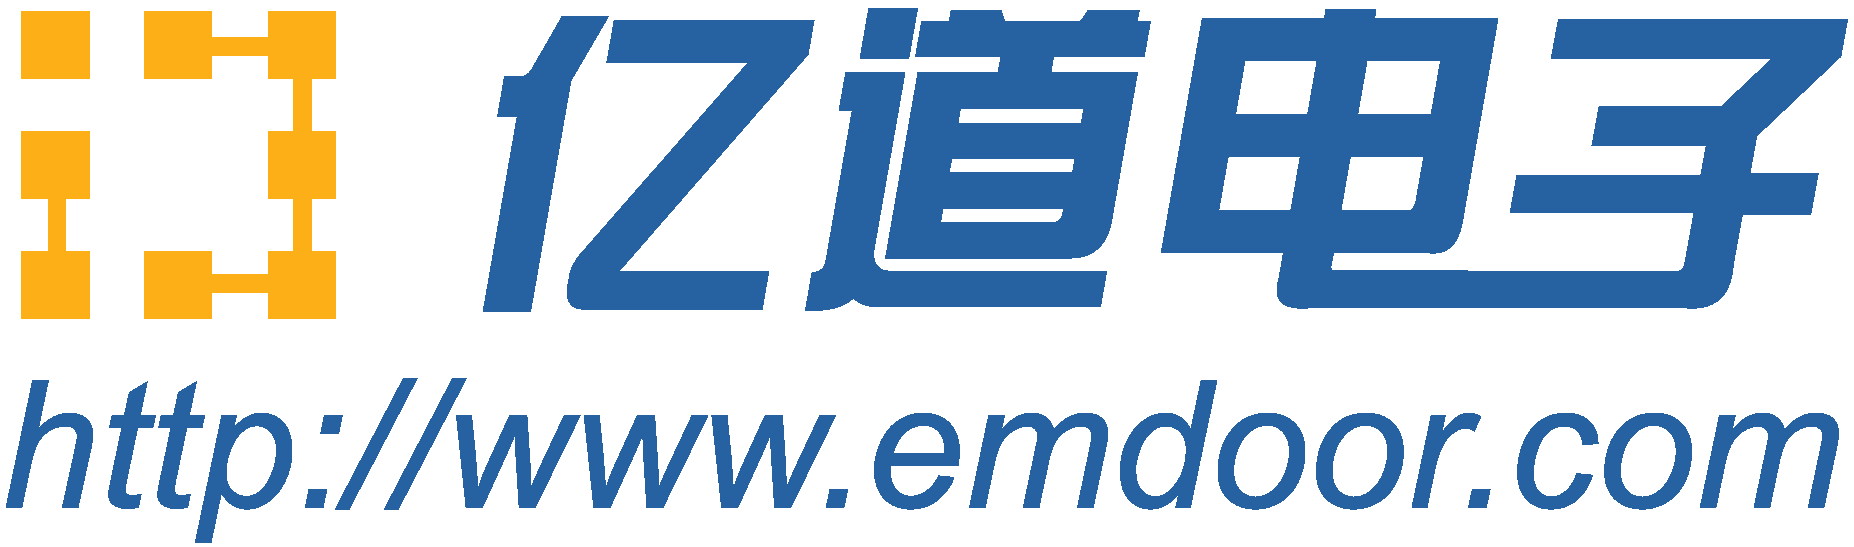 Emdoor Electronic Technology Co Ltd - Beijing